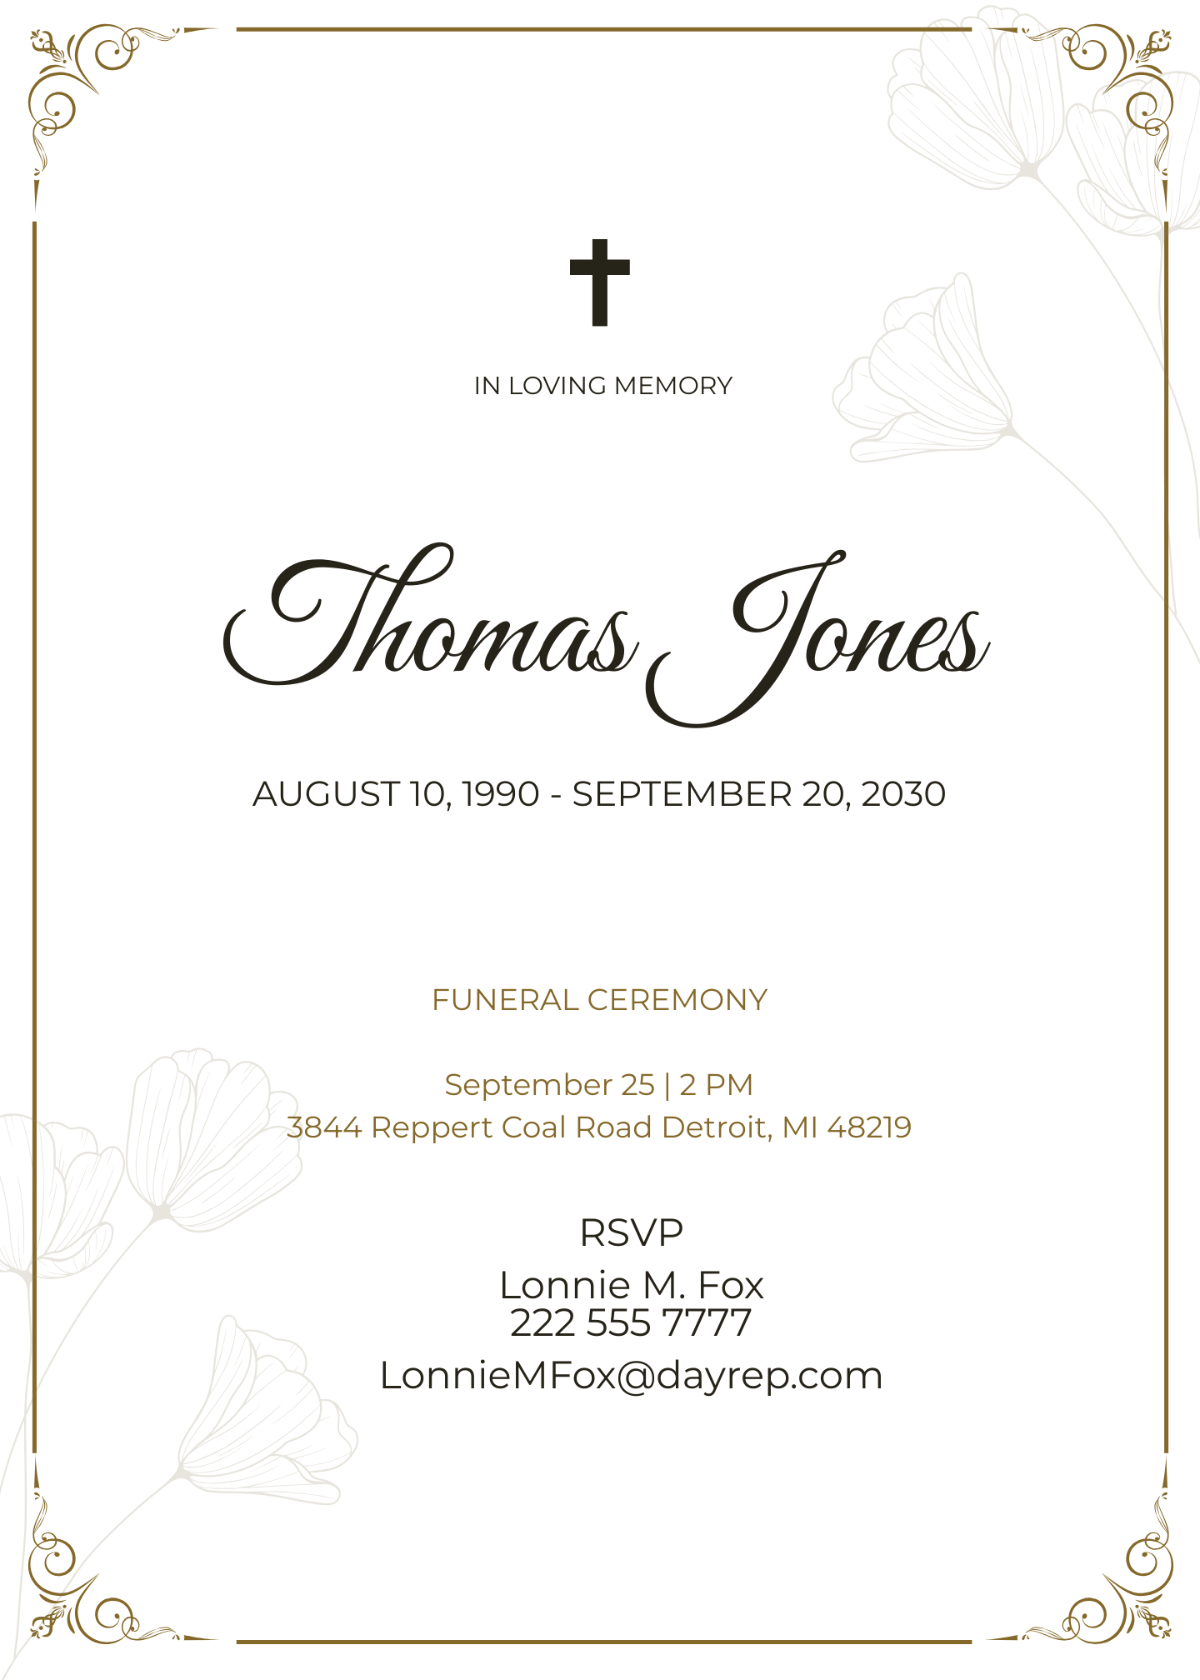 Funeral Ceremony Invitation Card